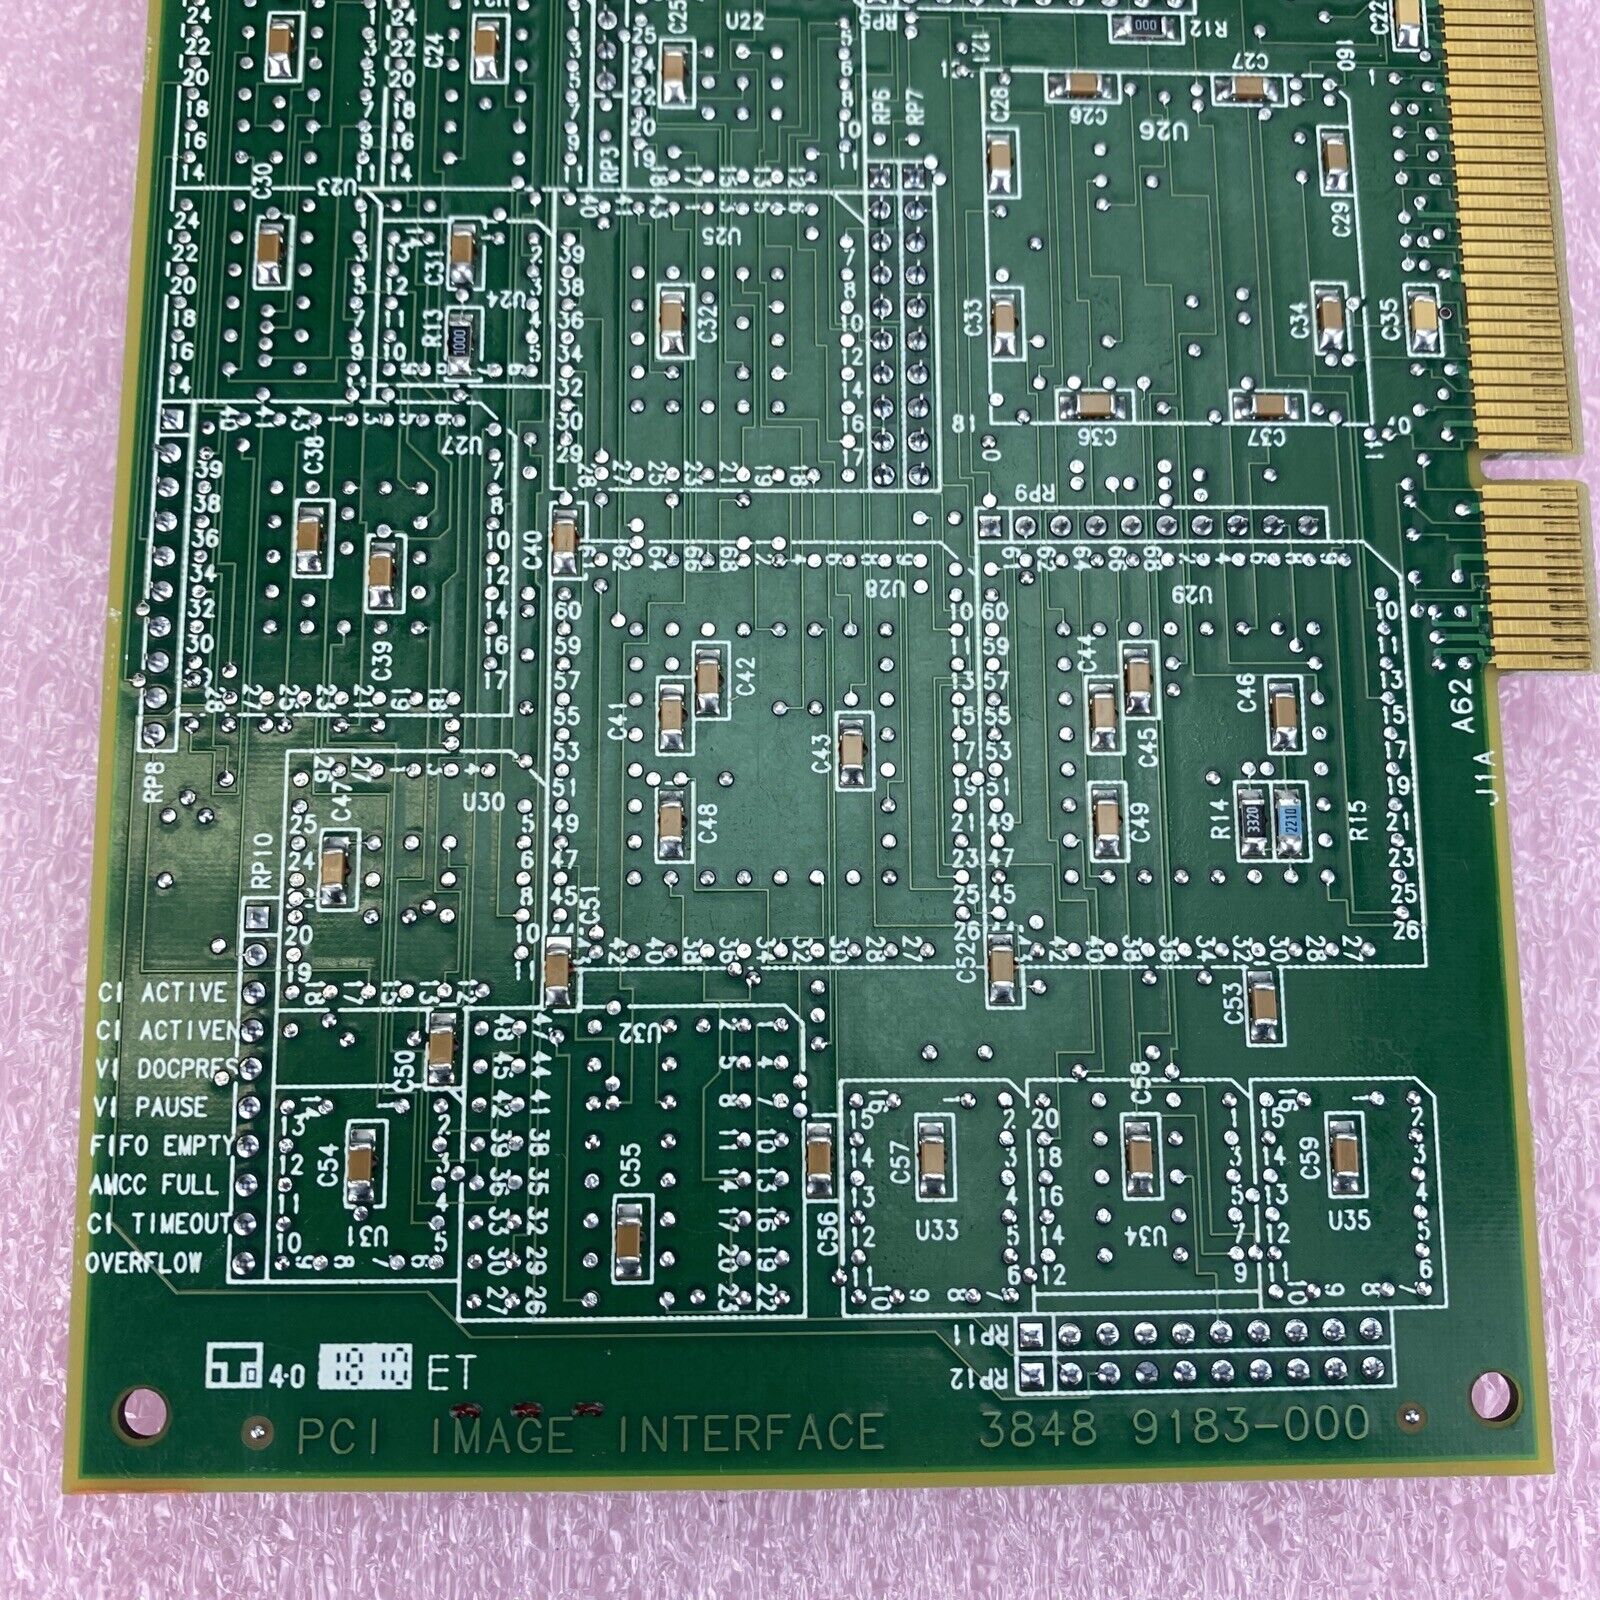 Unisys 38489126-000 Rev B PCI Image Interface